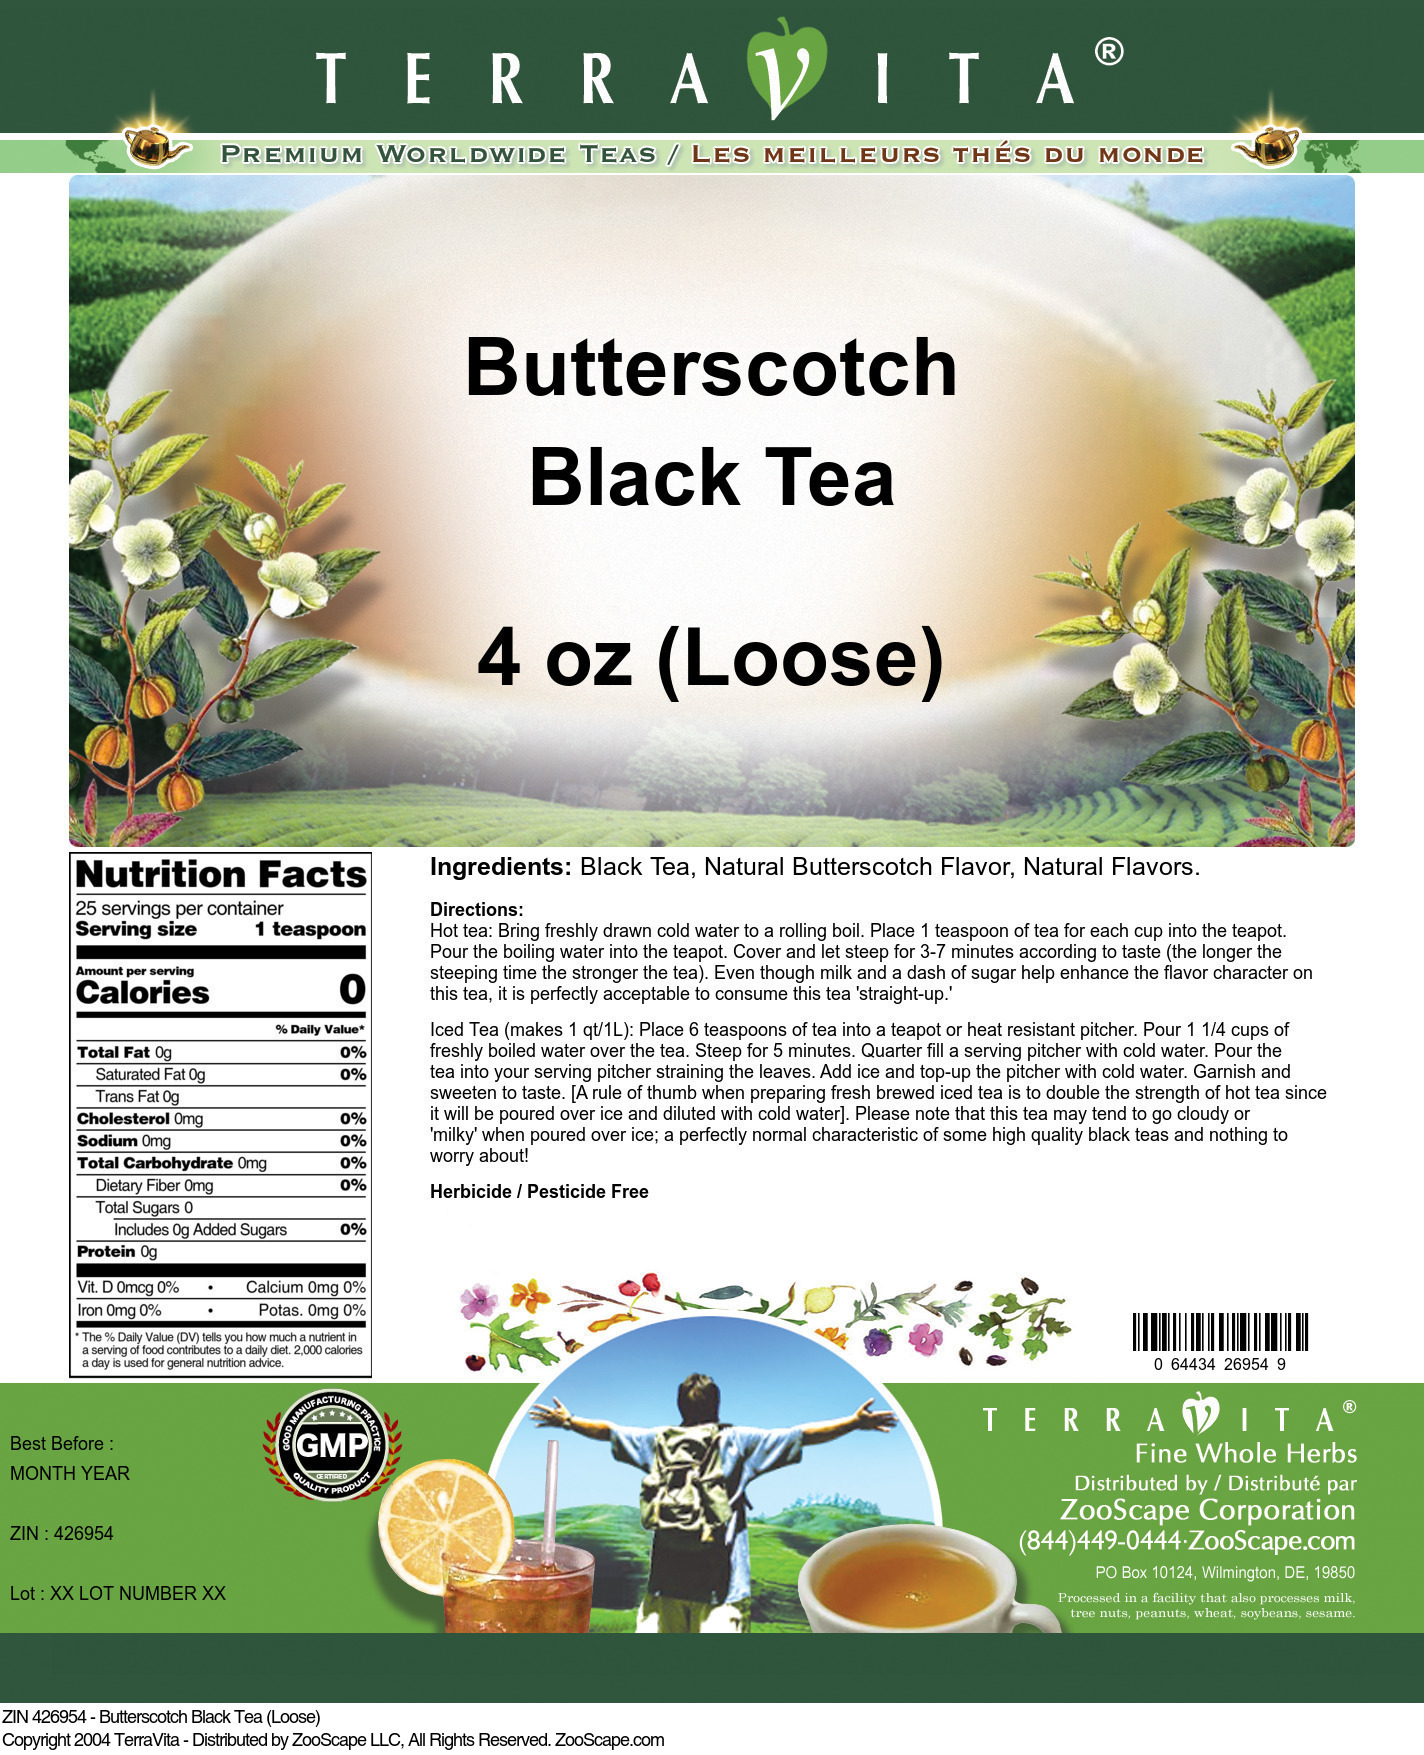 Butterscotch Black Tea (Loose) - Label